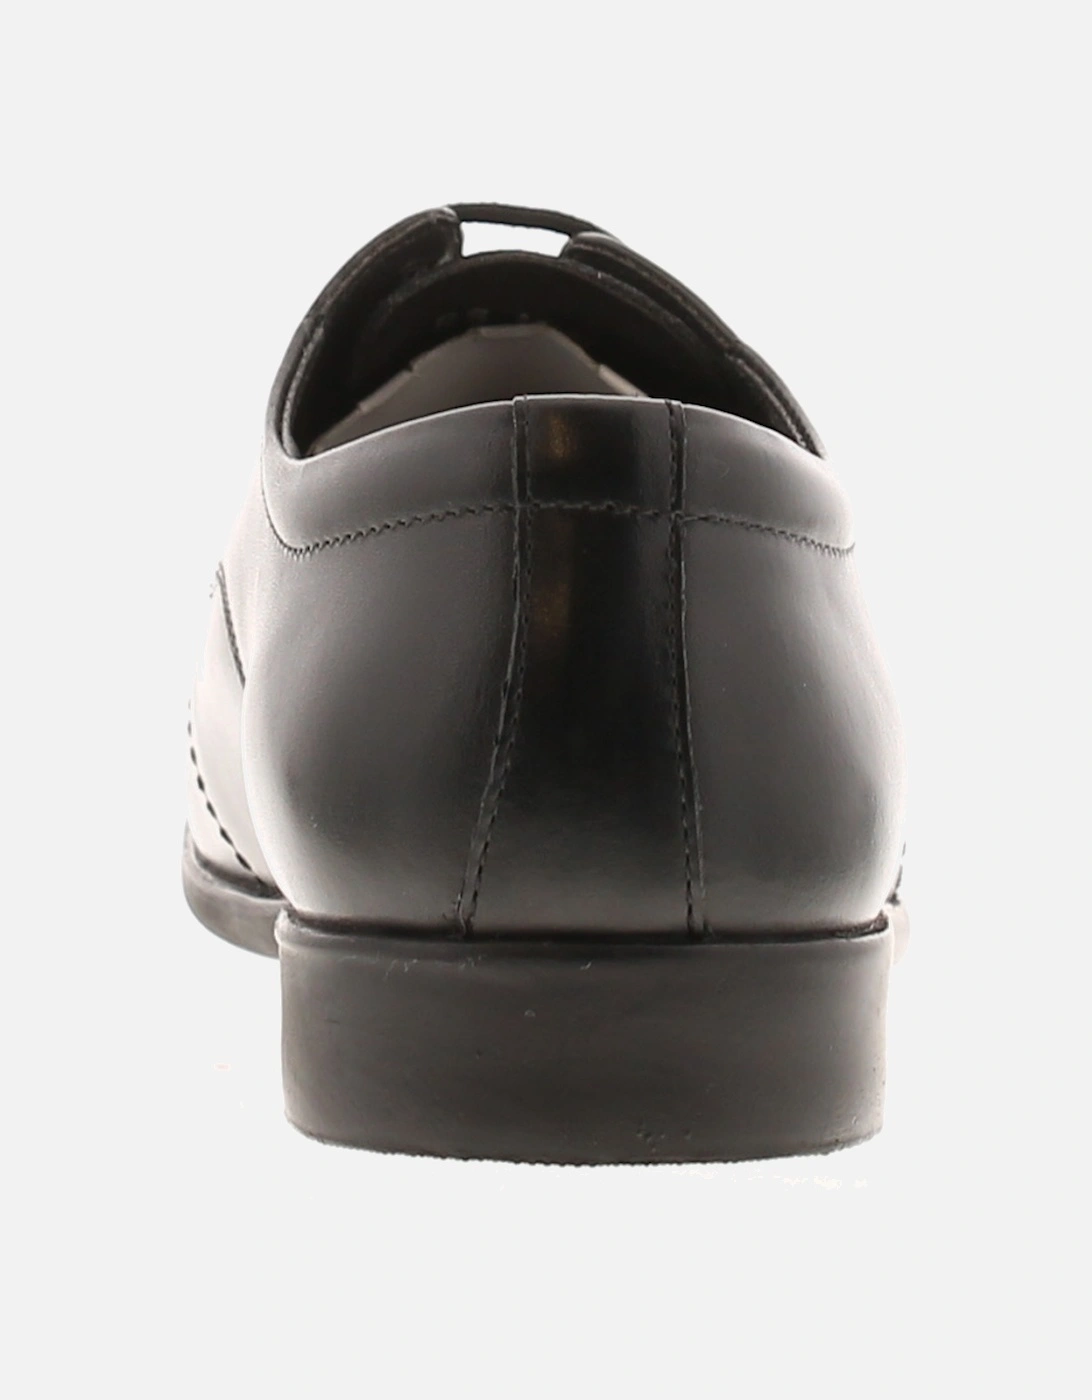 Boys School Shoes Formal Jon Leather black UK Size